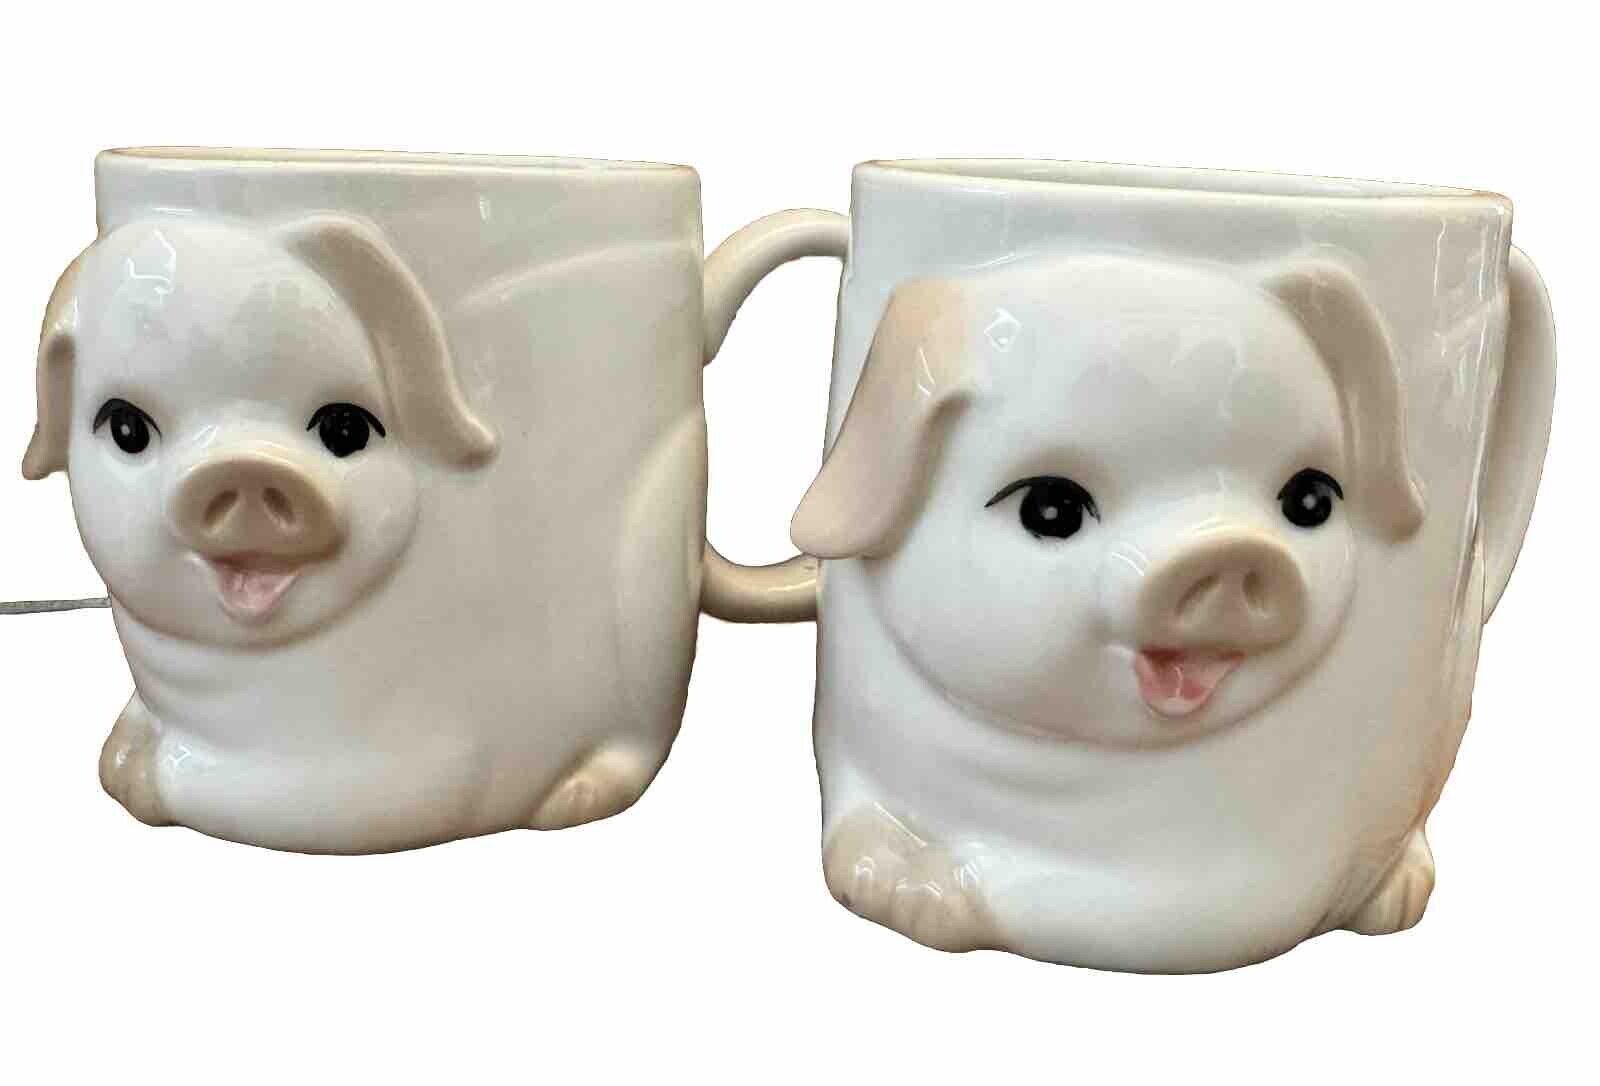 Pig mugs (2) Henriksen Imports Pig Design Figural Anthropomorphic Cup Mug Korea